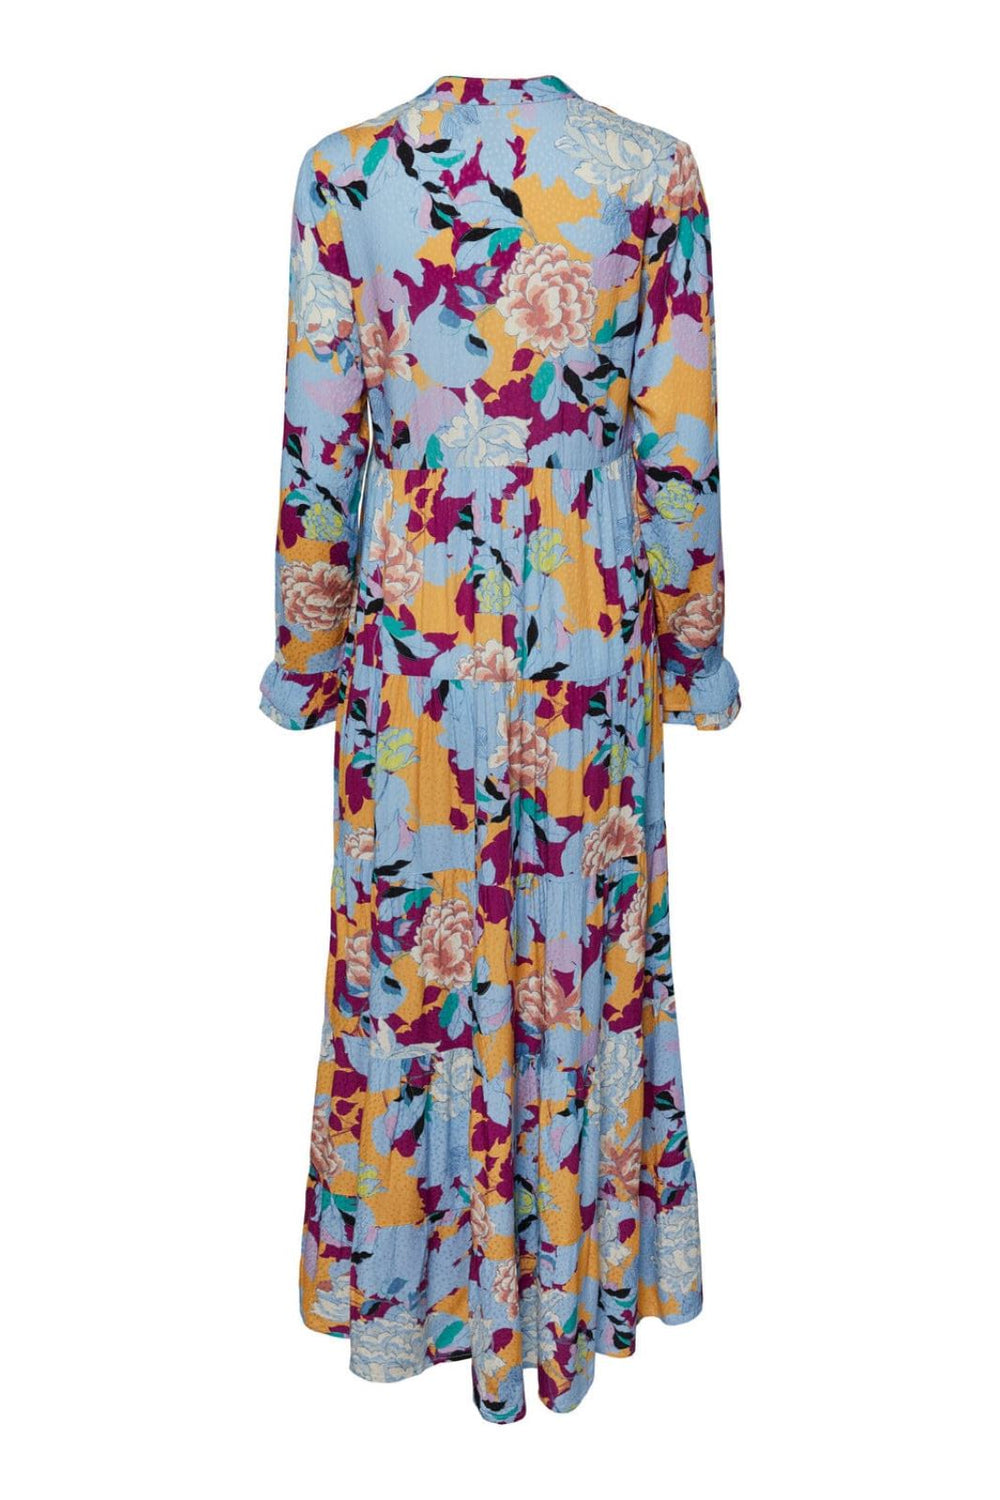 Y.A.S - Yaspivoine Ls Ankle Dress S. - Warm Apricot Pivoine print Kjoler 